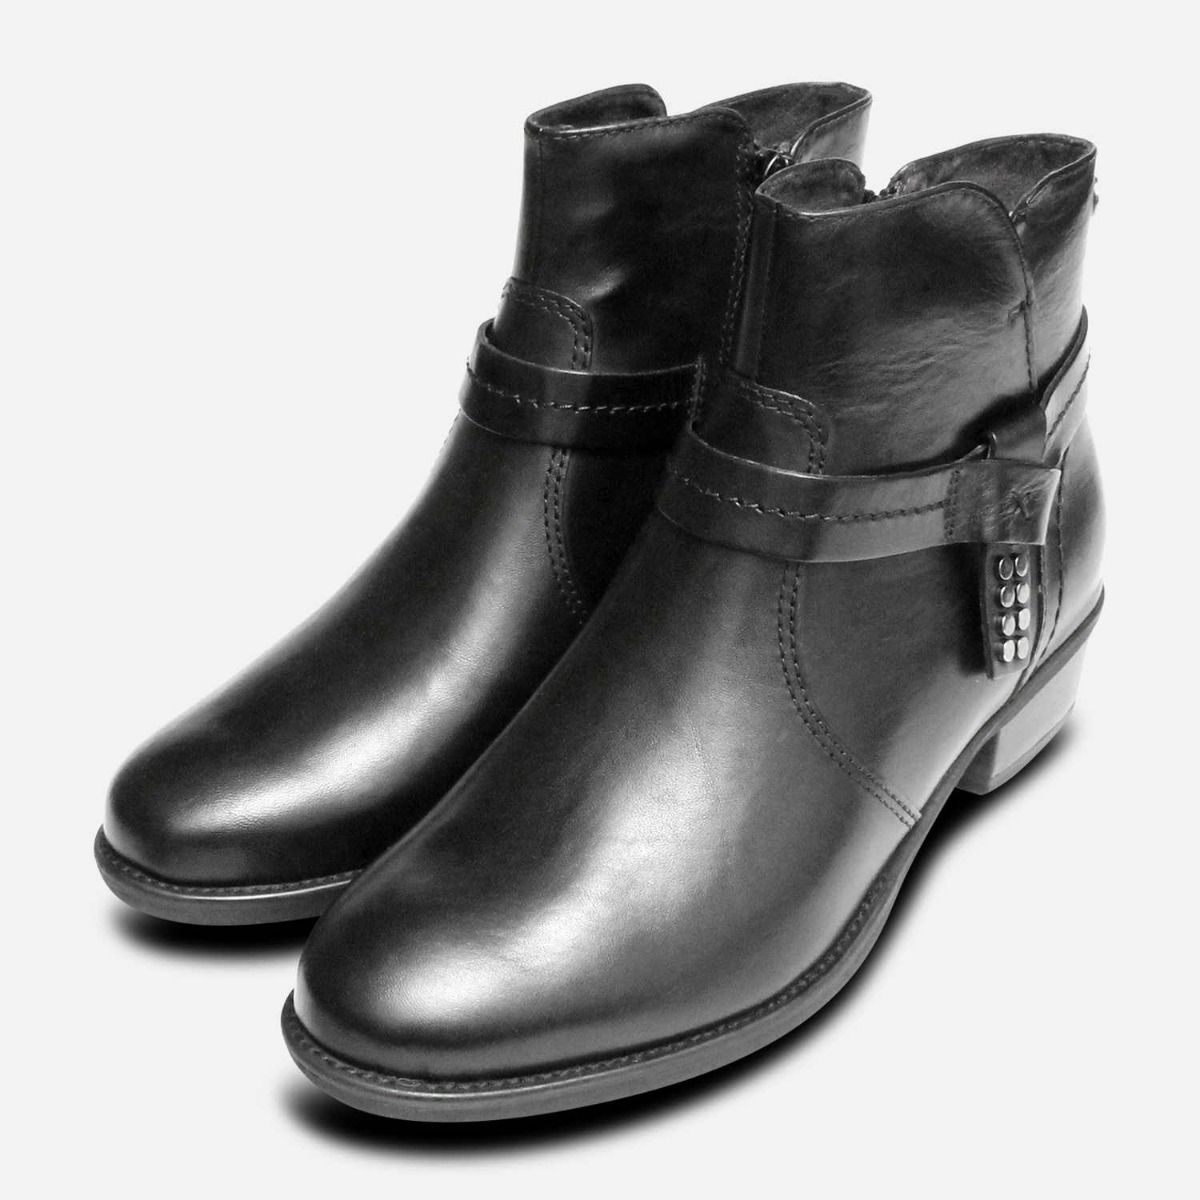 Tamaris 25311 Women’s Ankle Boots 39 EU 5.5 UK Black Black Comb 